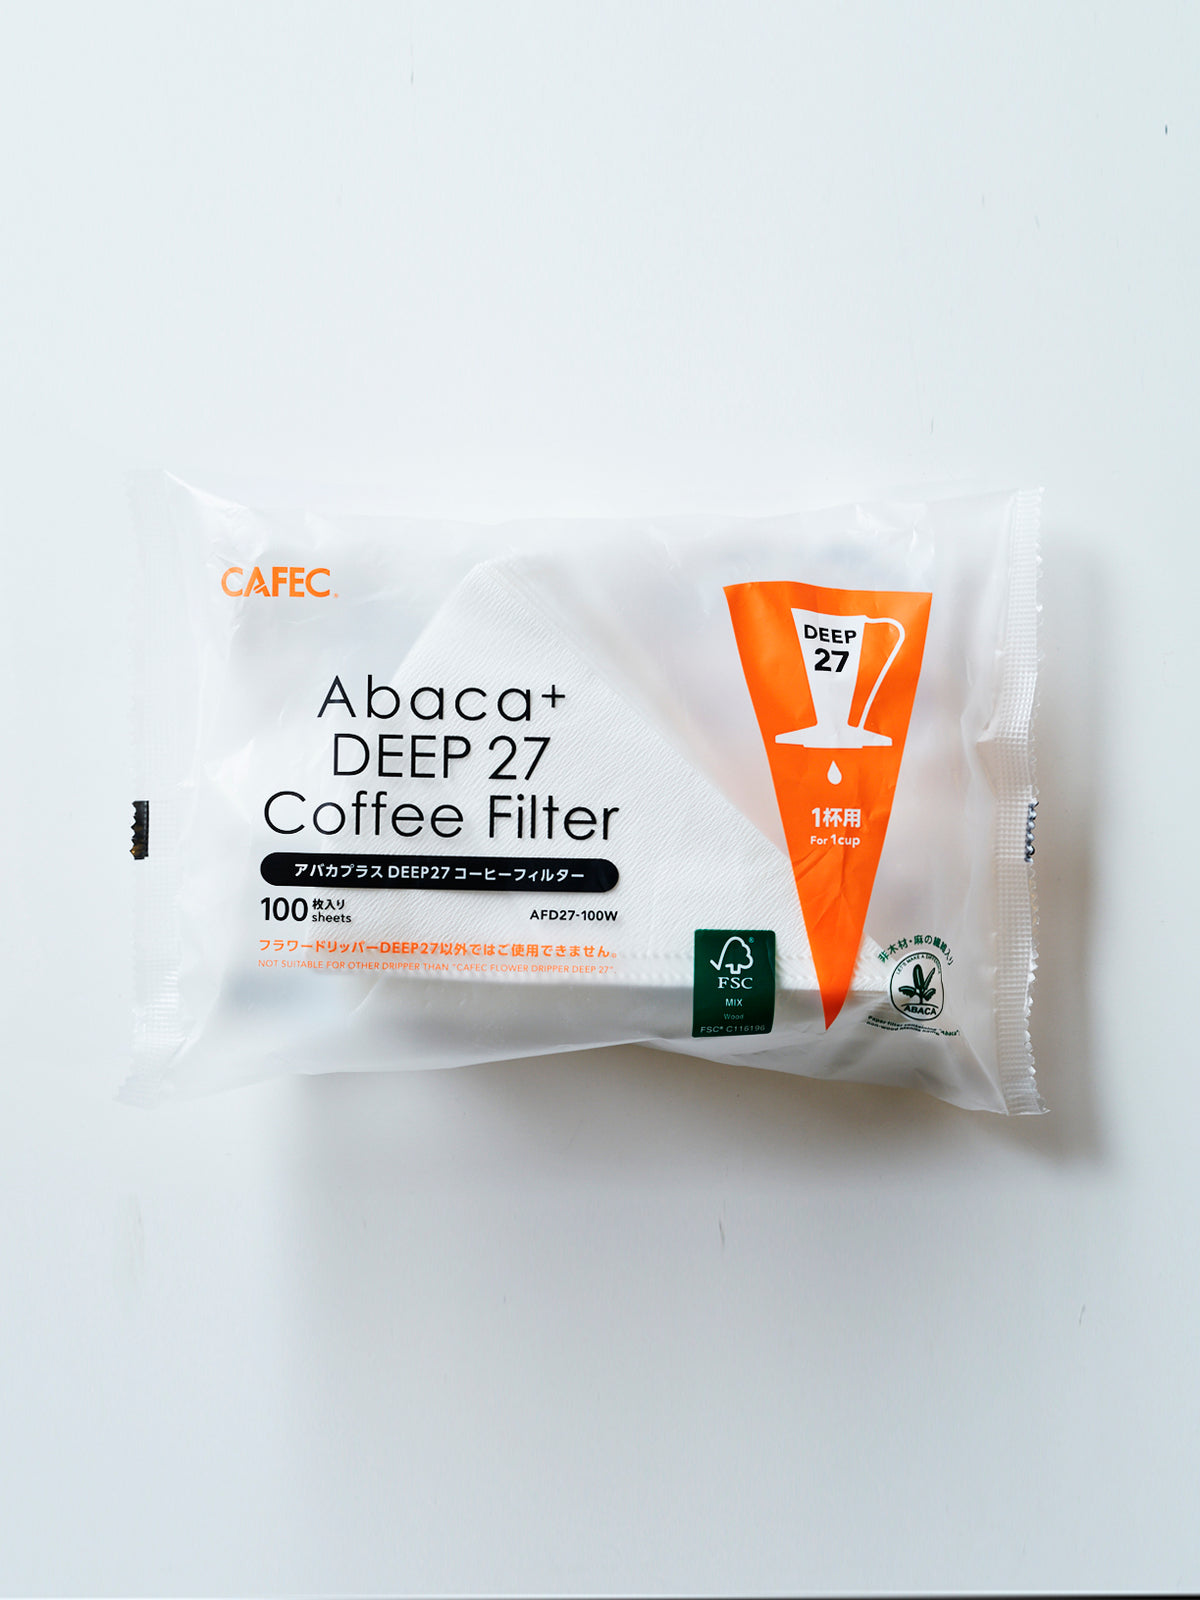 CAFEC Abaca Plus Deep 27 Coffee Filter